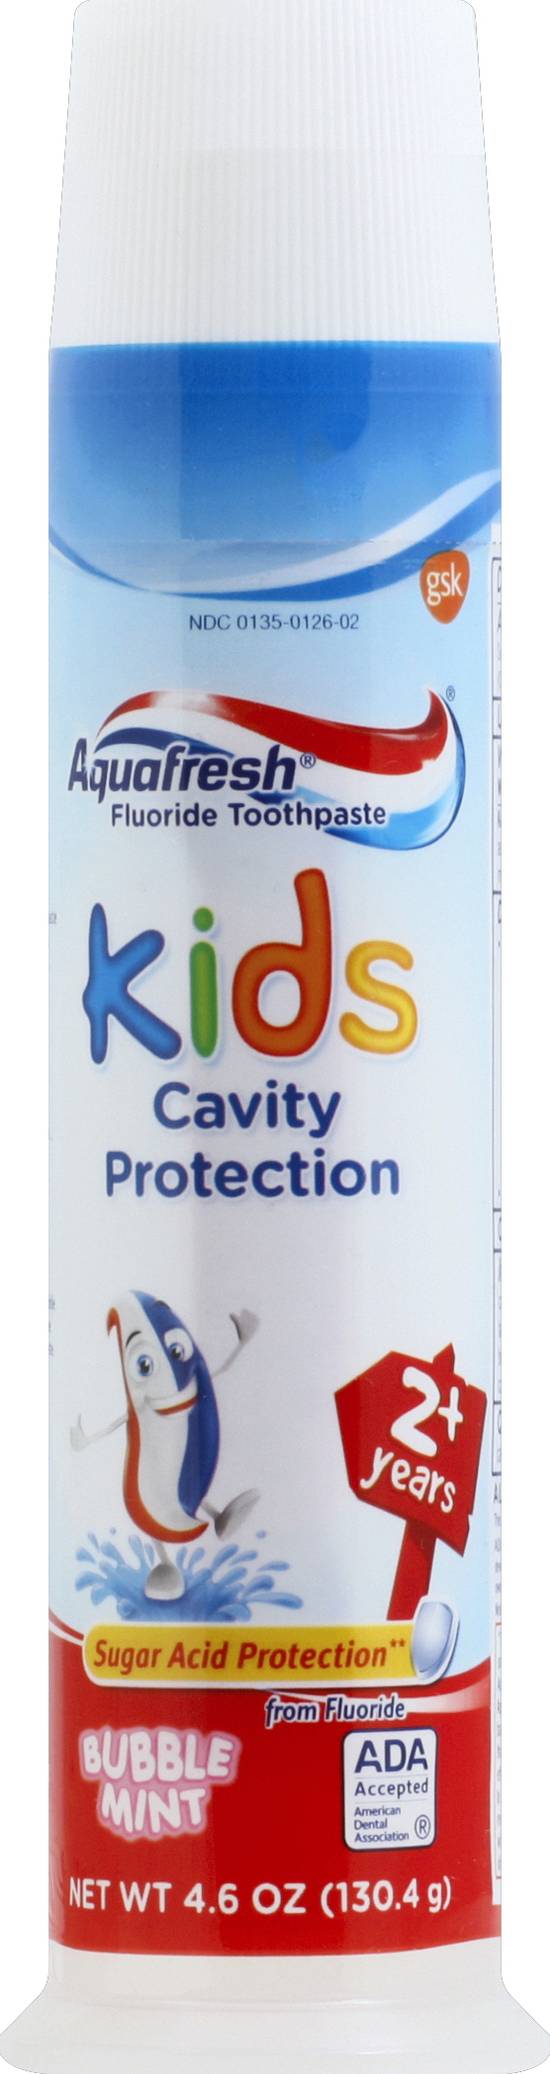 Aquafresh Kids Cavity Protection Toothpaste (bubble mint)